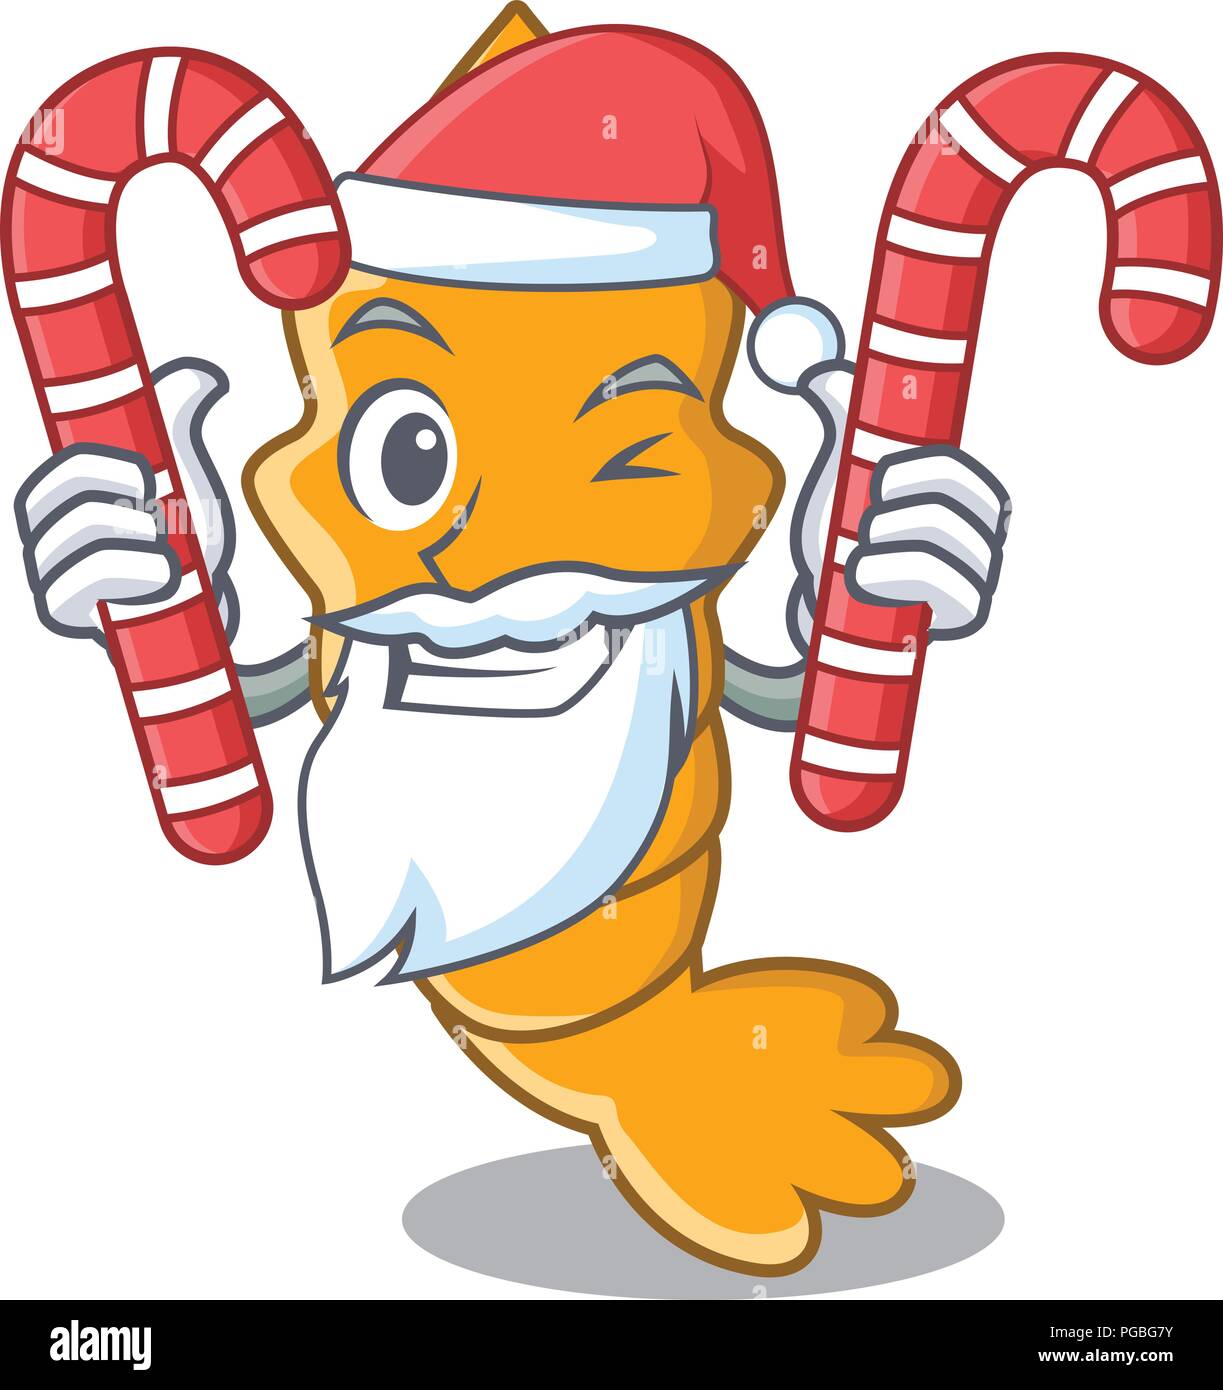 Santa avec des bonbons à la vapeur crevettes crues fraîches sur mascot cartoon vector illustration Illustration de Vecteur